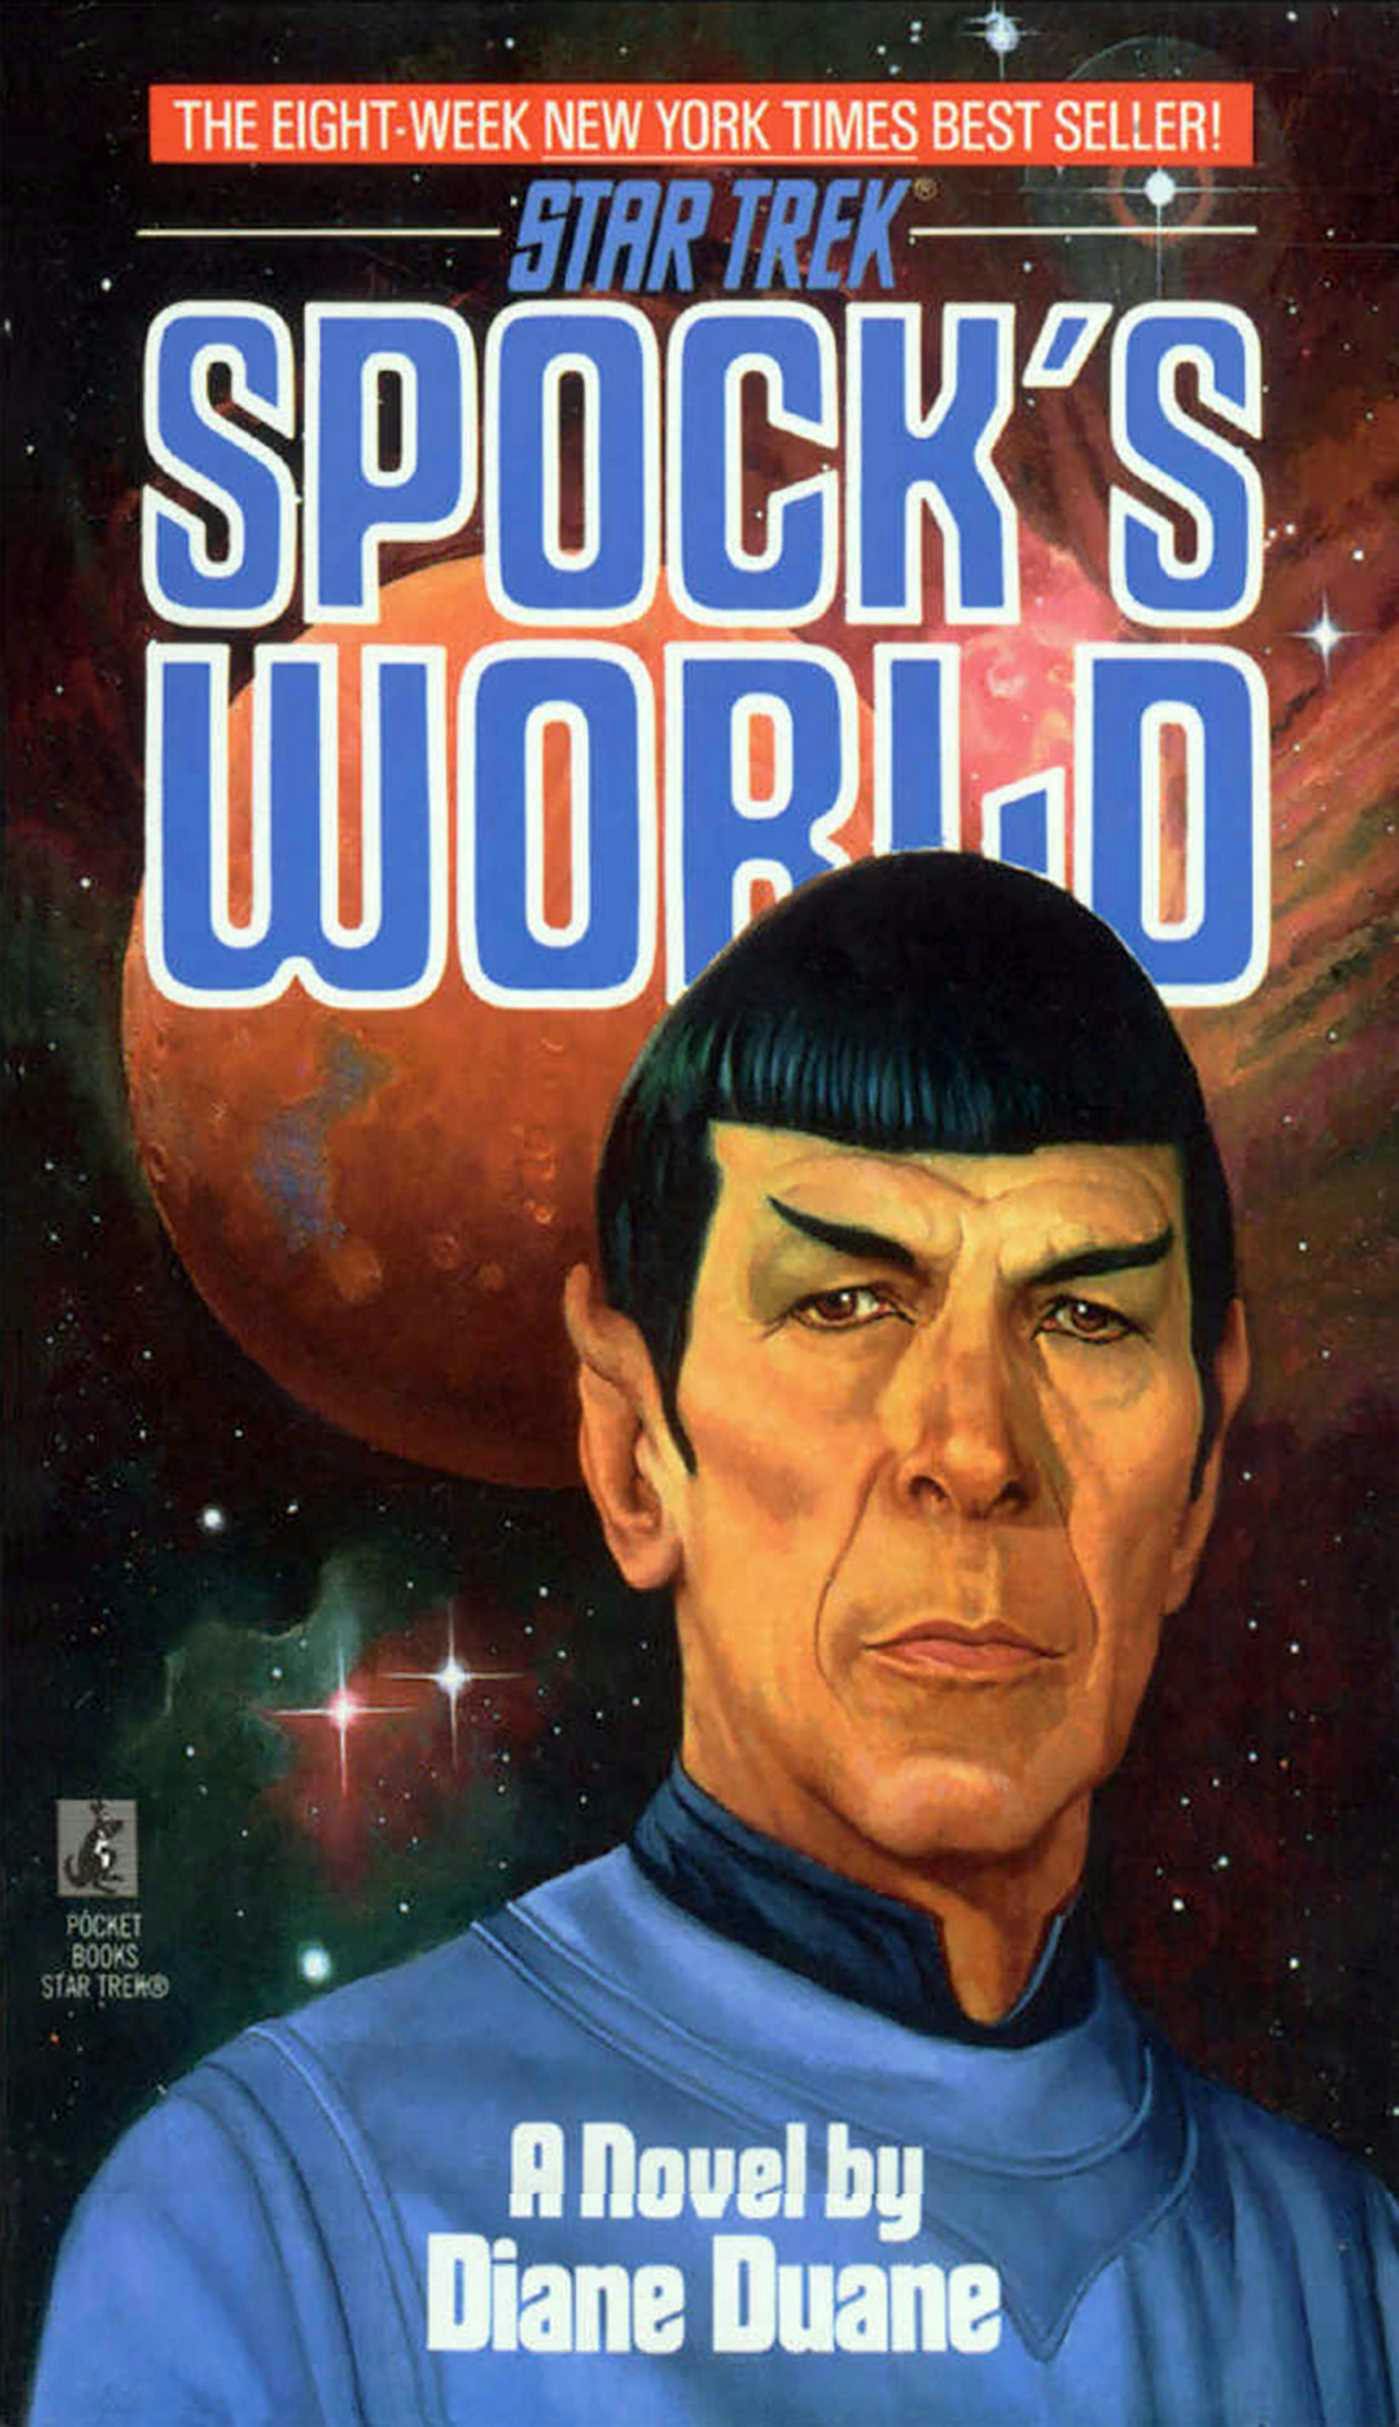 Spock's World - undefined